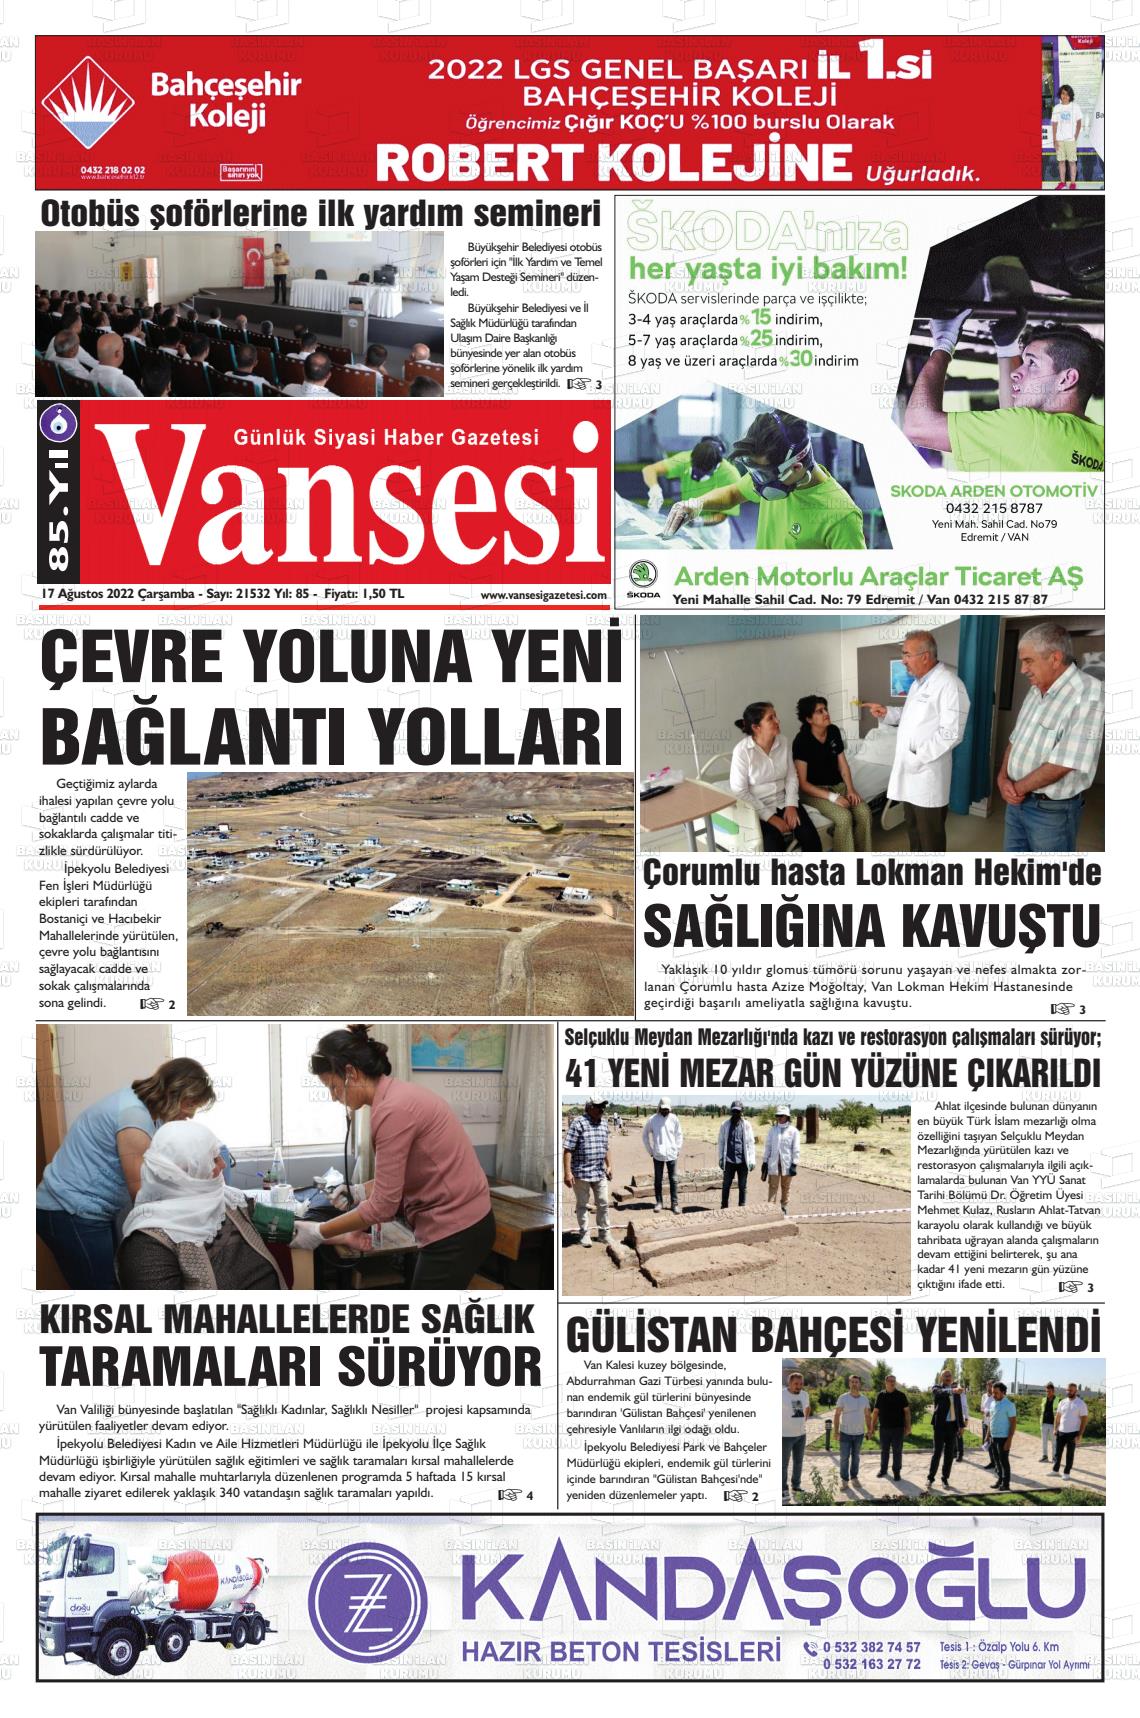 17 Ağustos 2022 Vansesi Gazete Manşeti